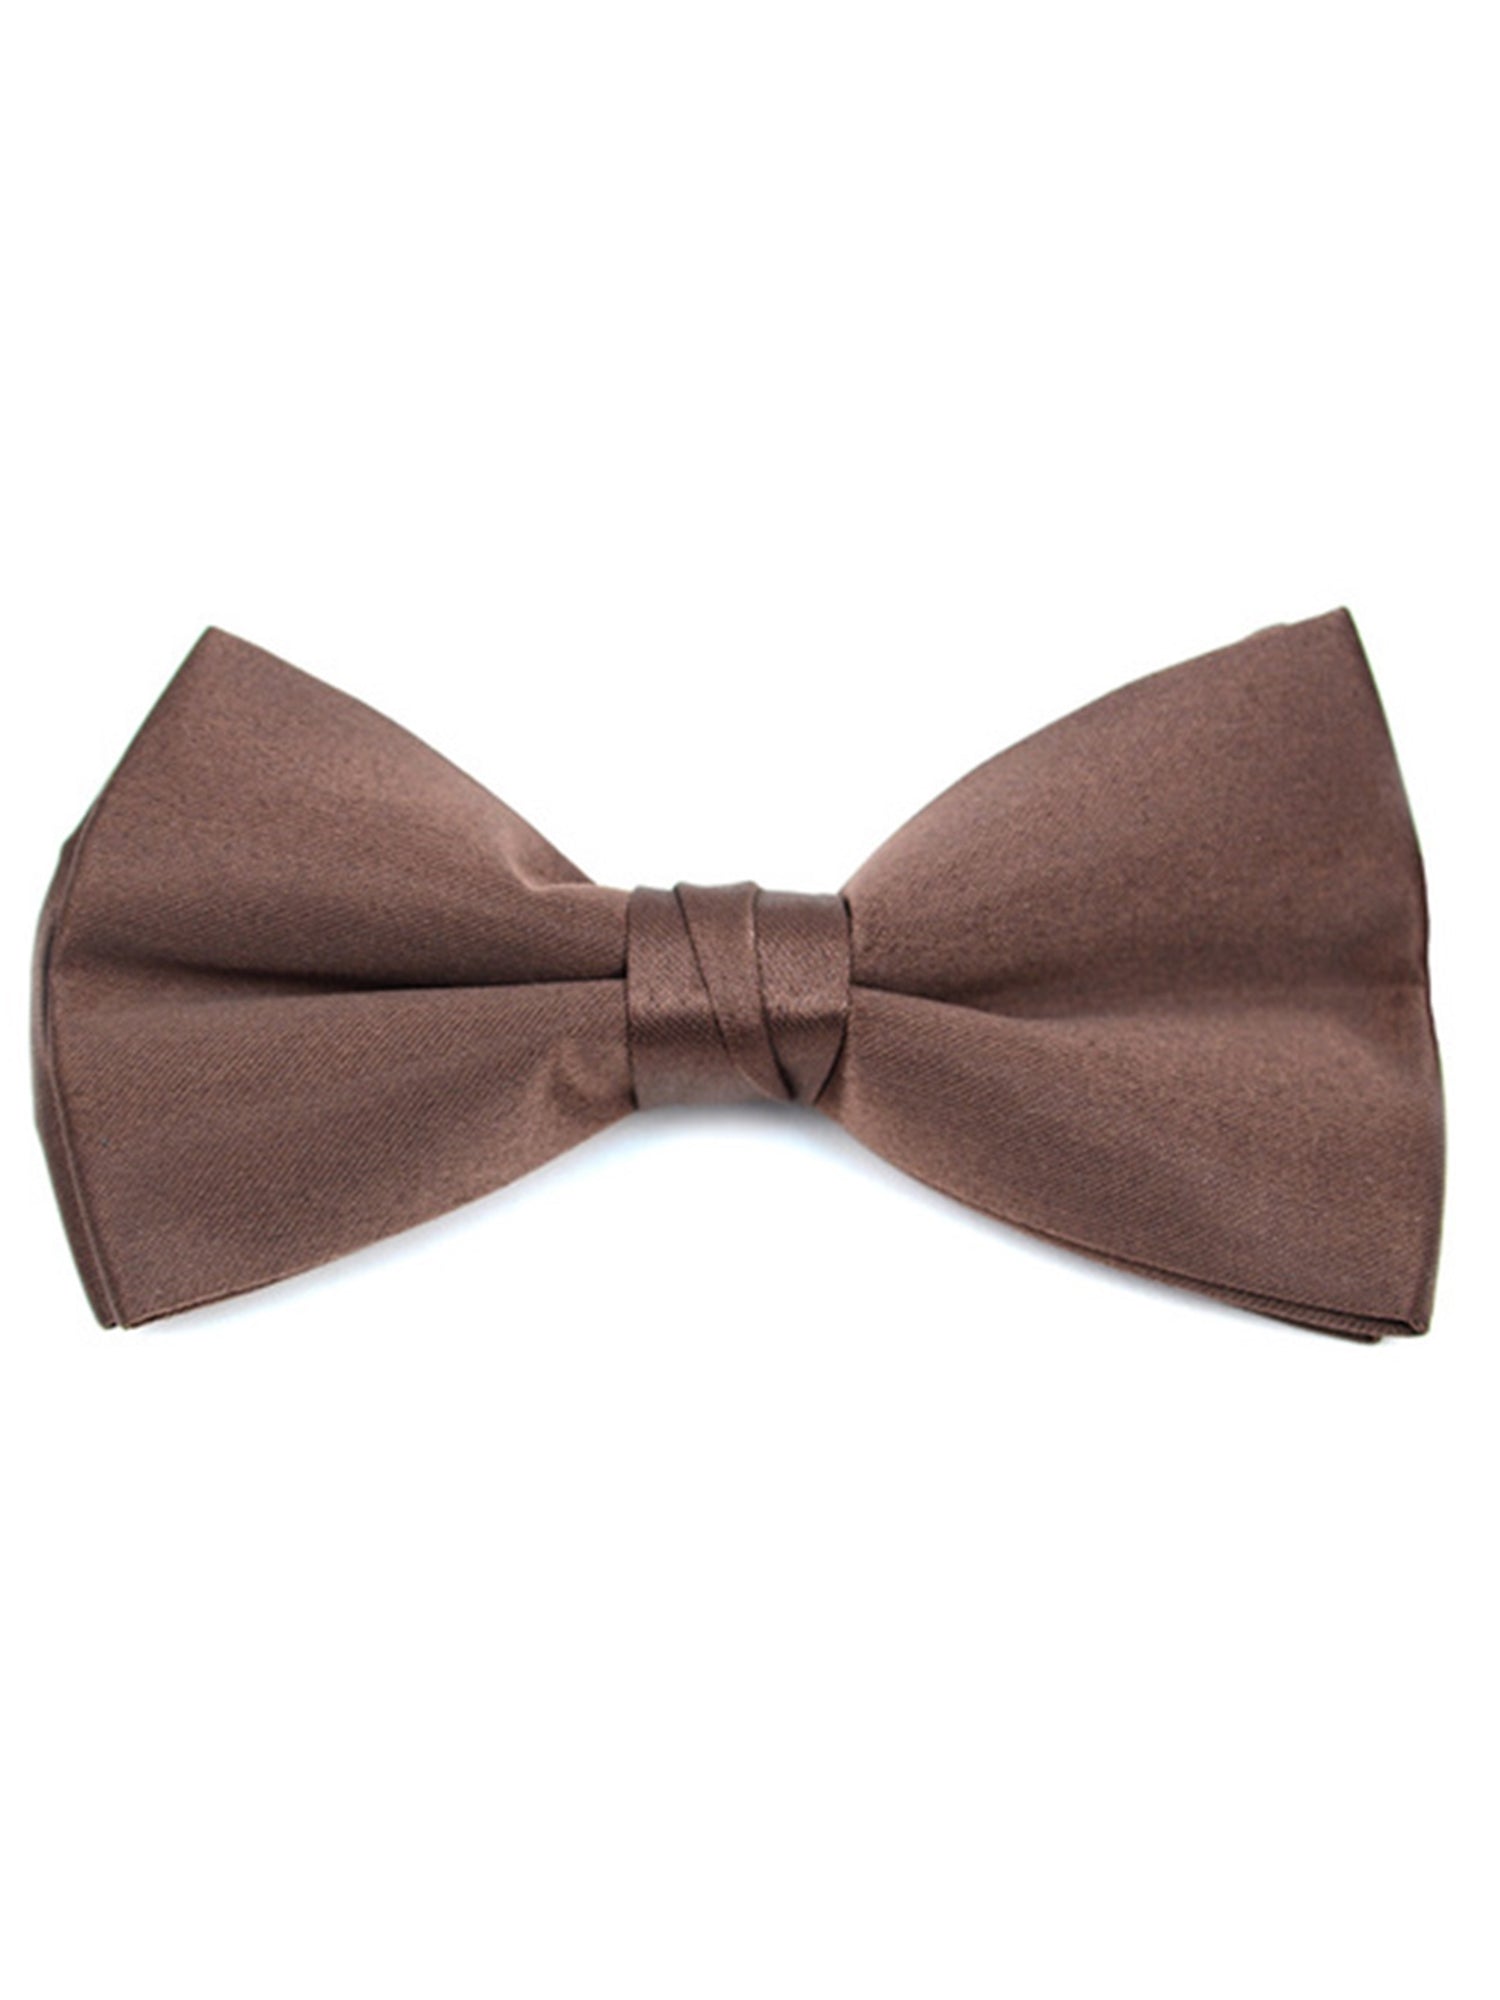 Men's Pre-tied Adjustable Length Bow Tie - Formal Tuxedo Solid Color Men's Solid Color Bow Tie TheDapperTie Brown One Size 